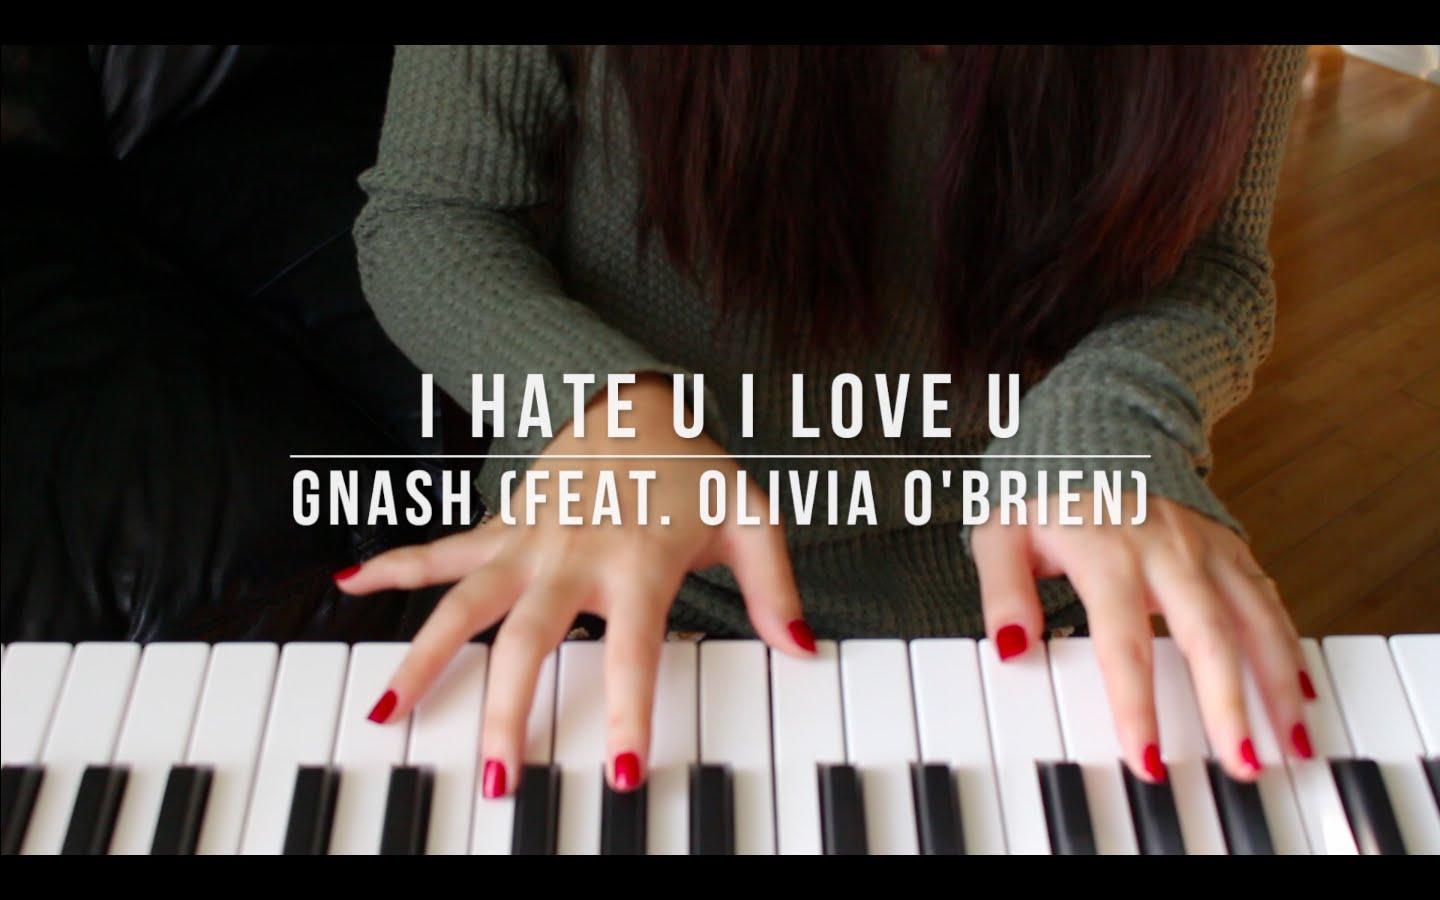 I HATE U I LOVE U FEAT. OLIVIA O'BRIEN (COVER)